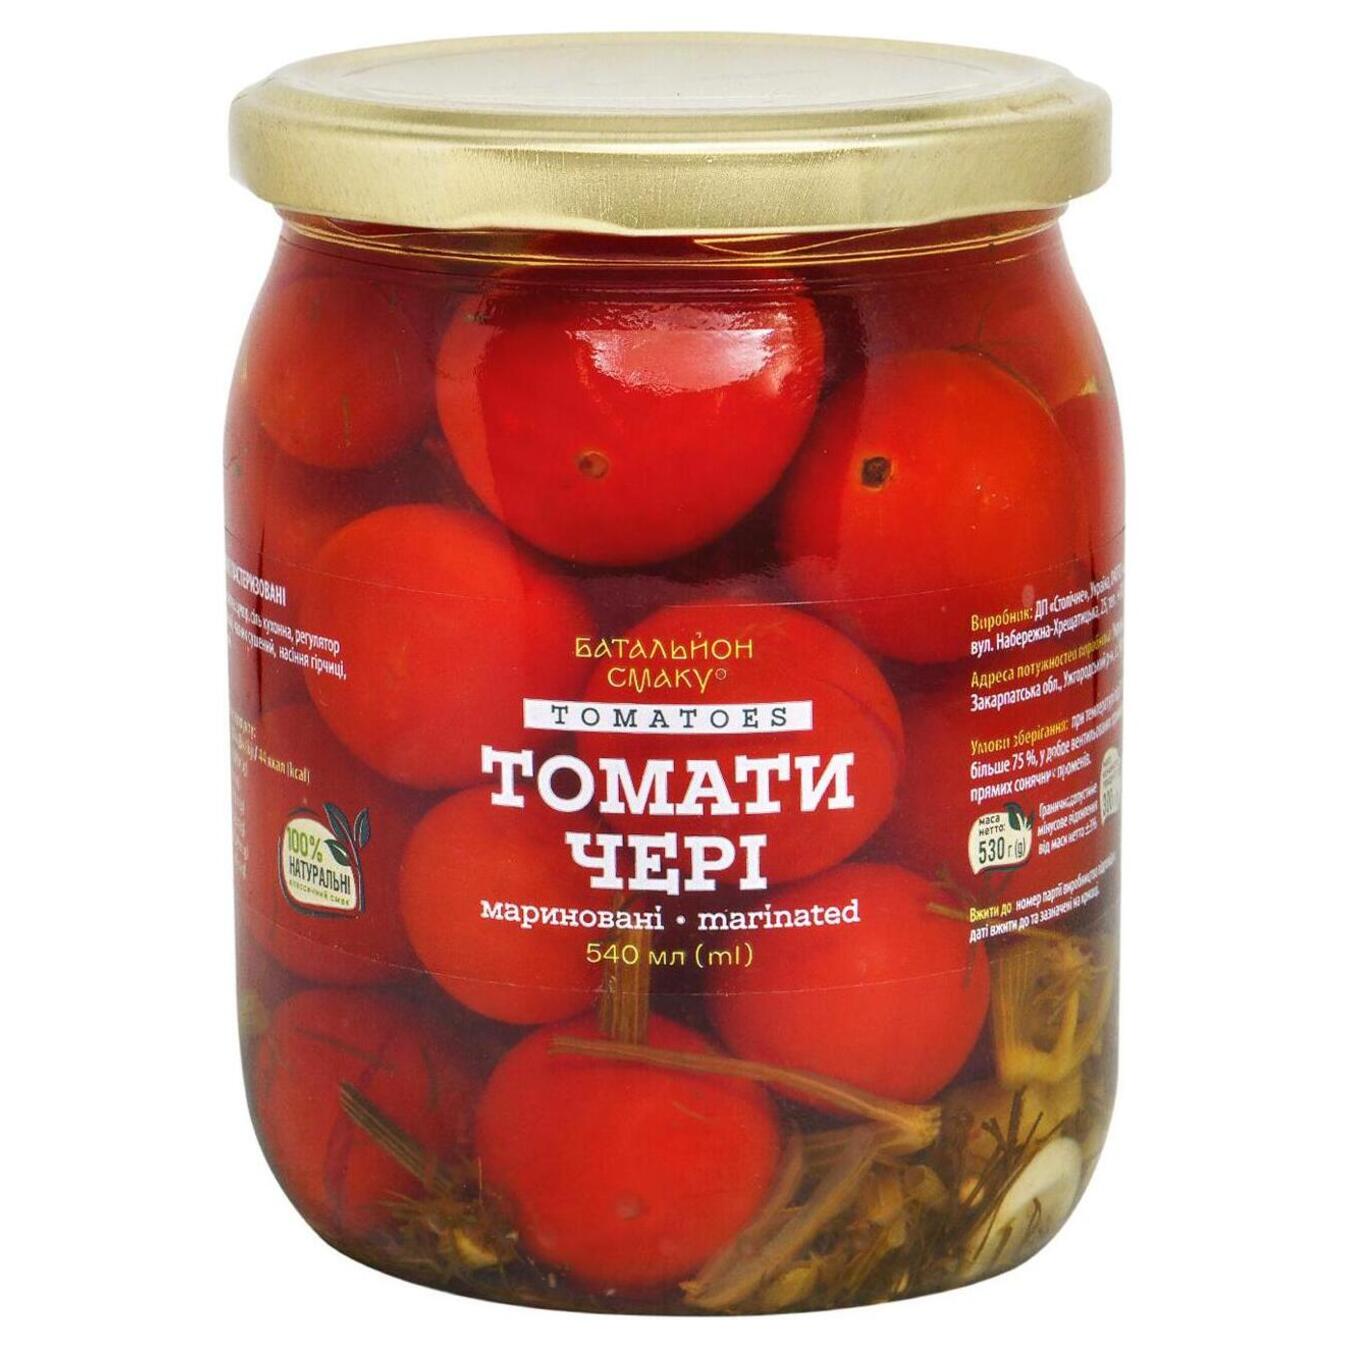 Tomatoes Battalion of taste pickled cherries 540ml glass